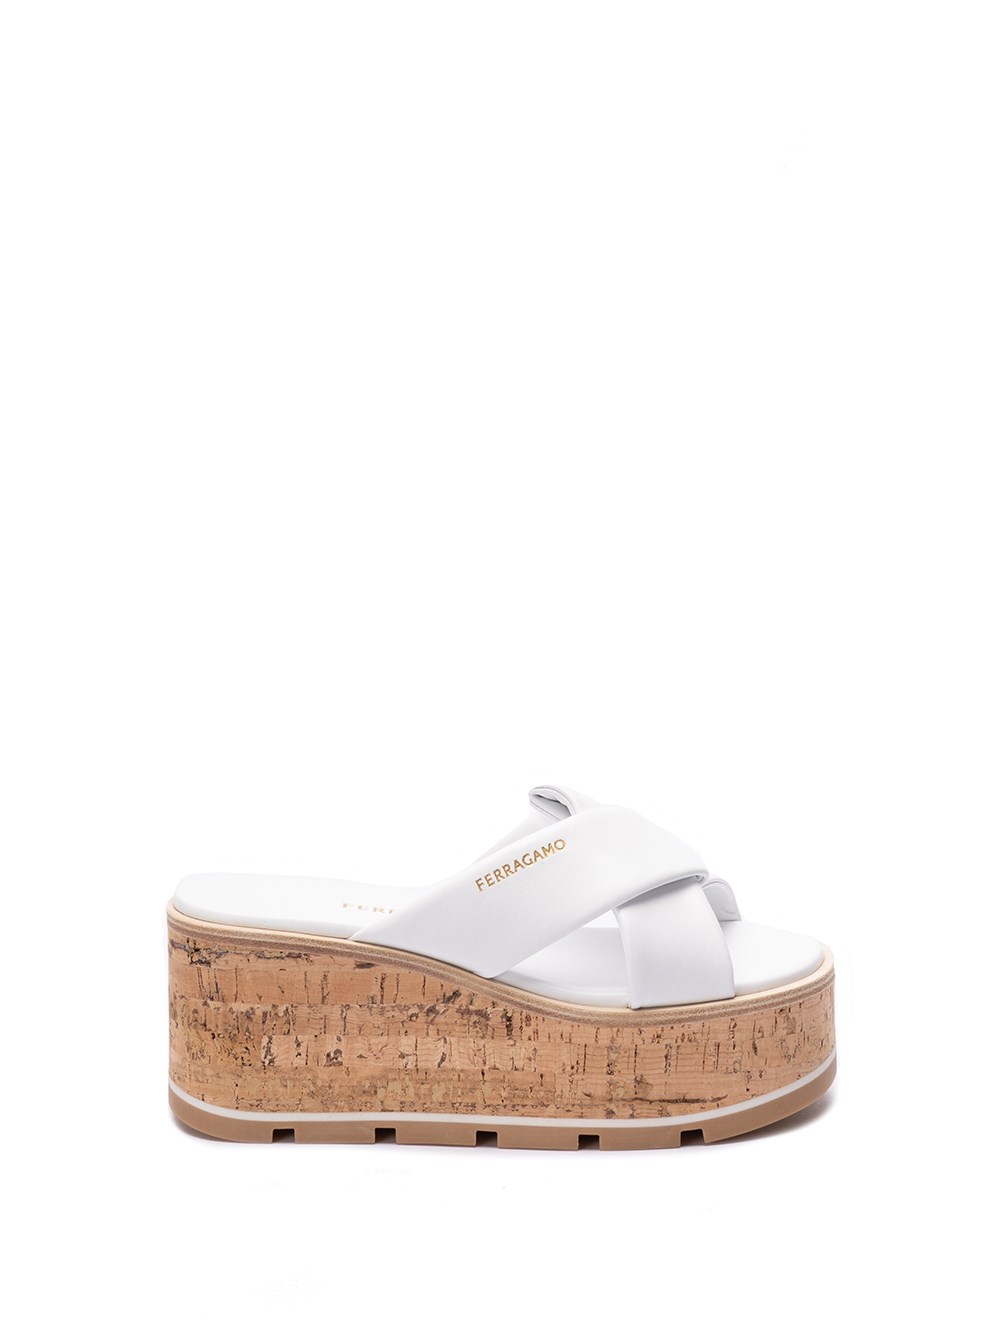 Ferragamo Engracia Leather Cork Slide Sandals In Optic White